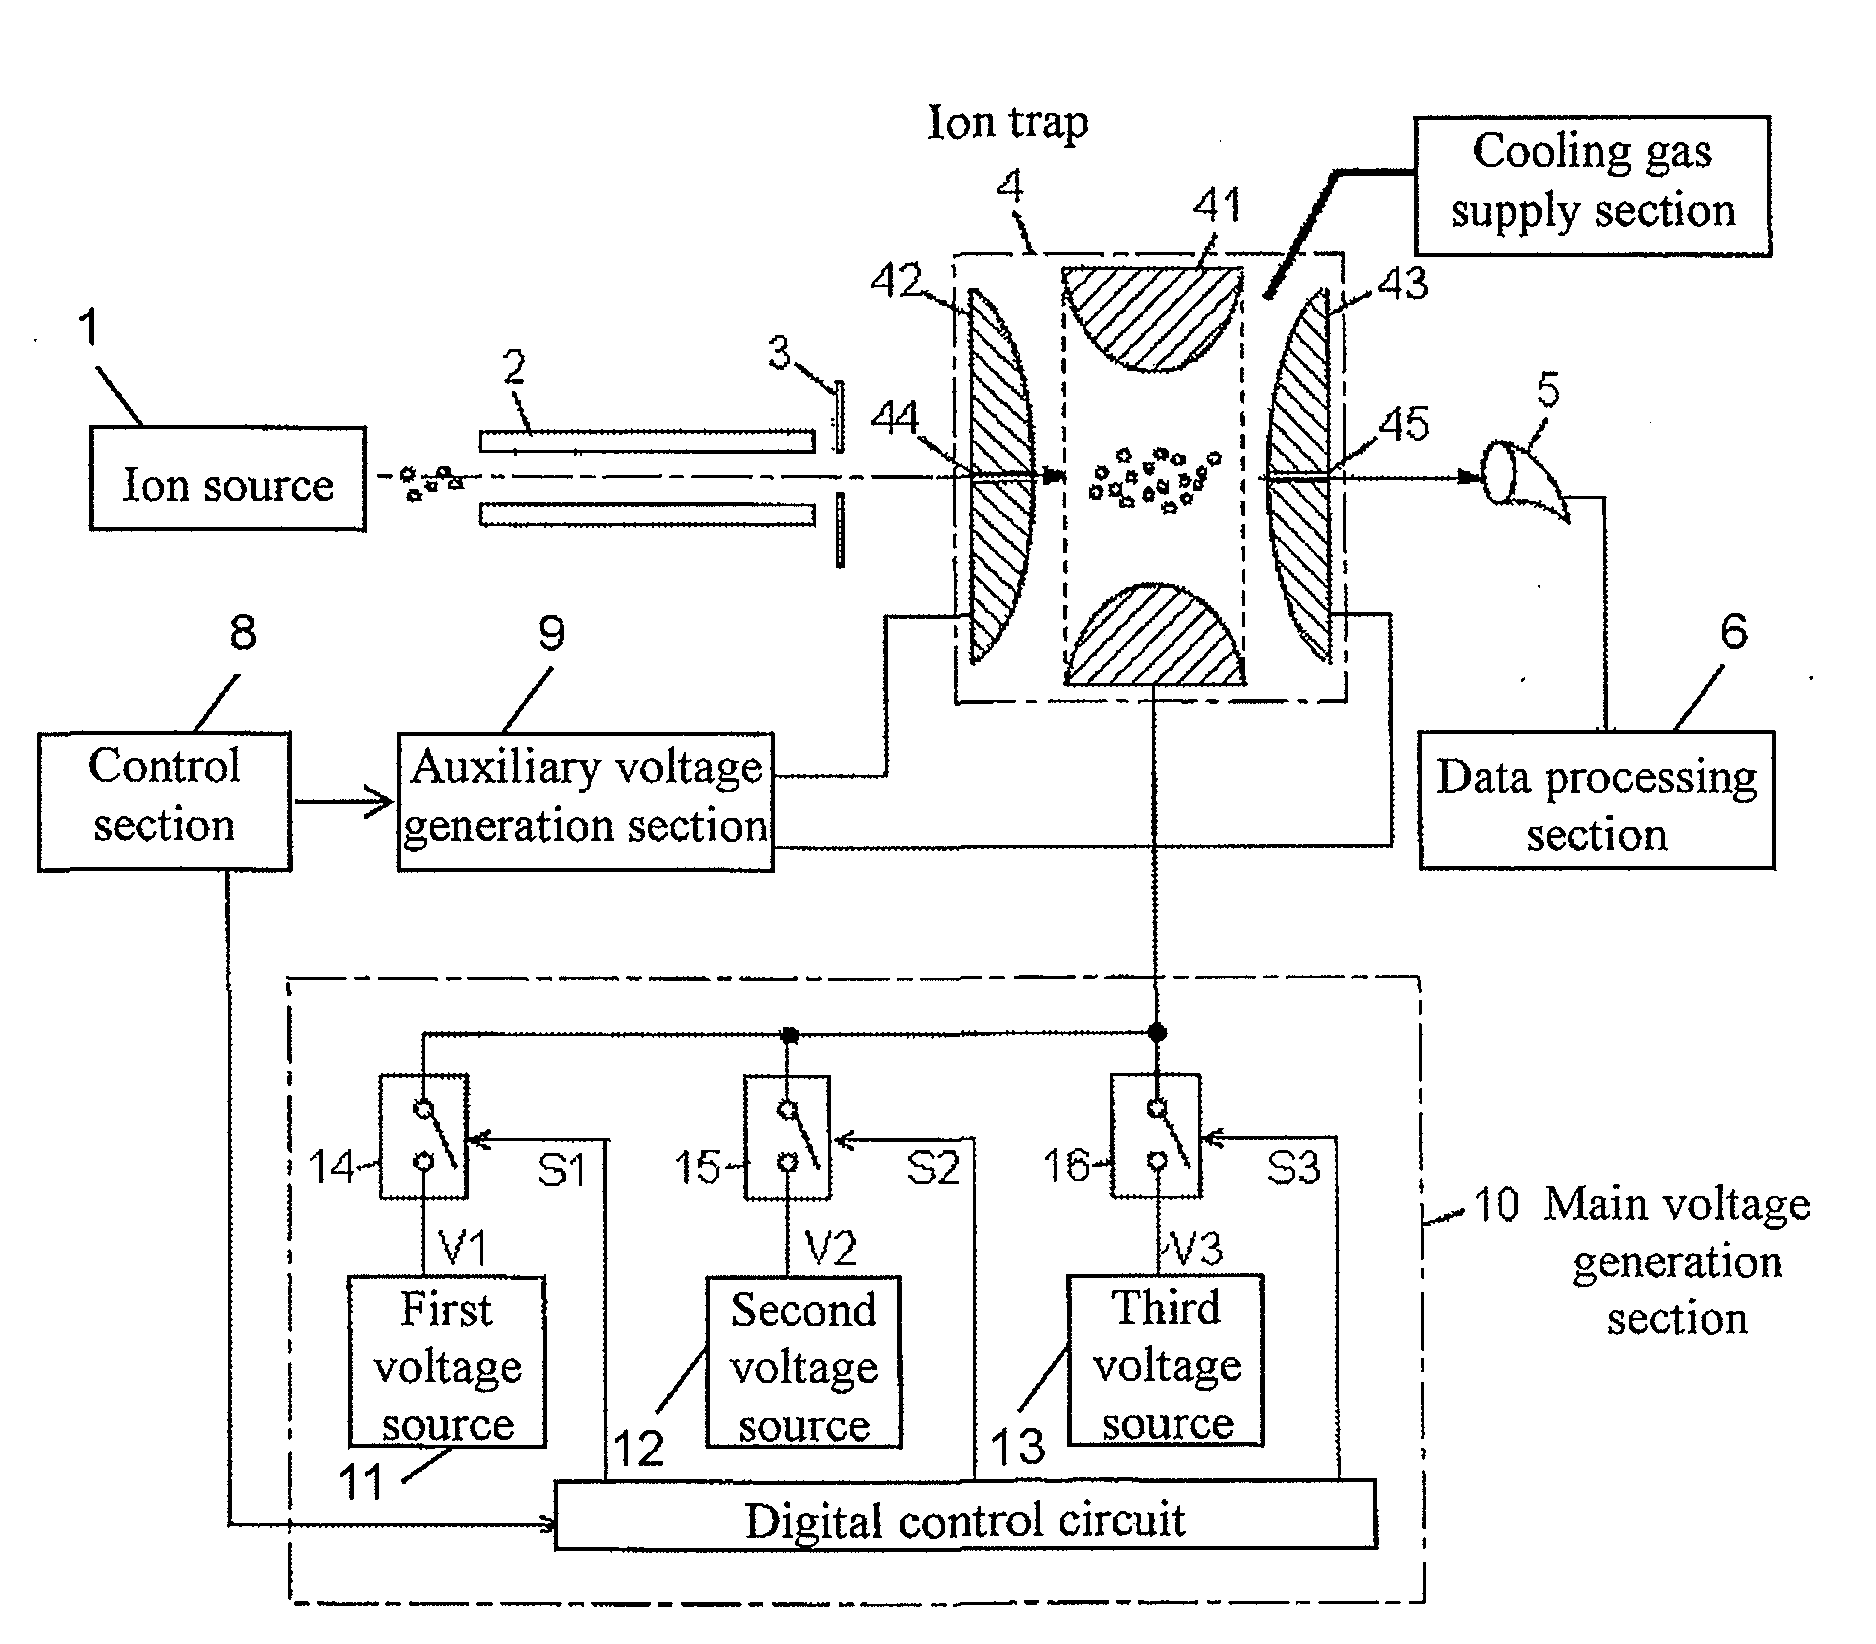 Ion trap mass spectrometer